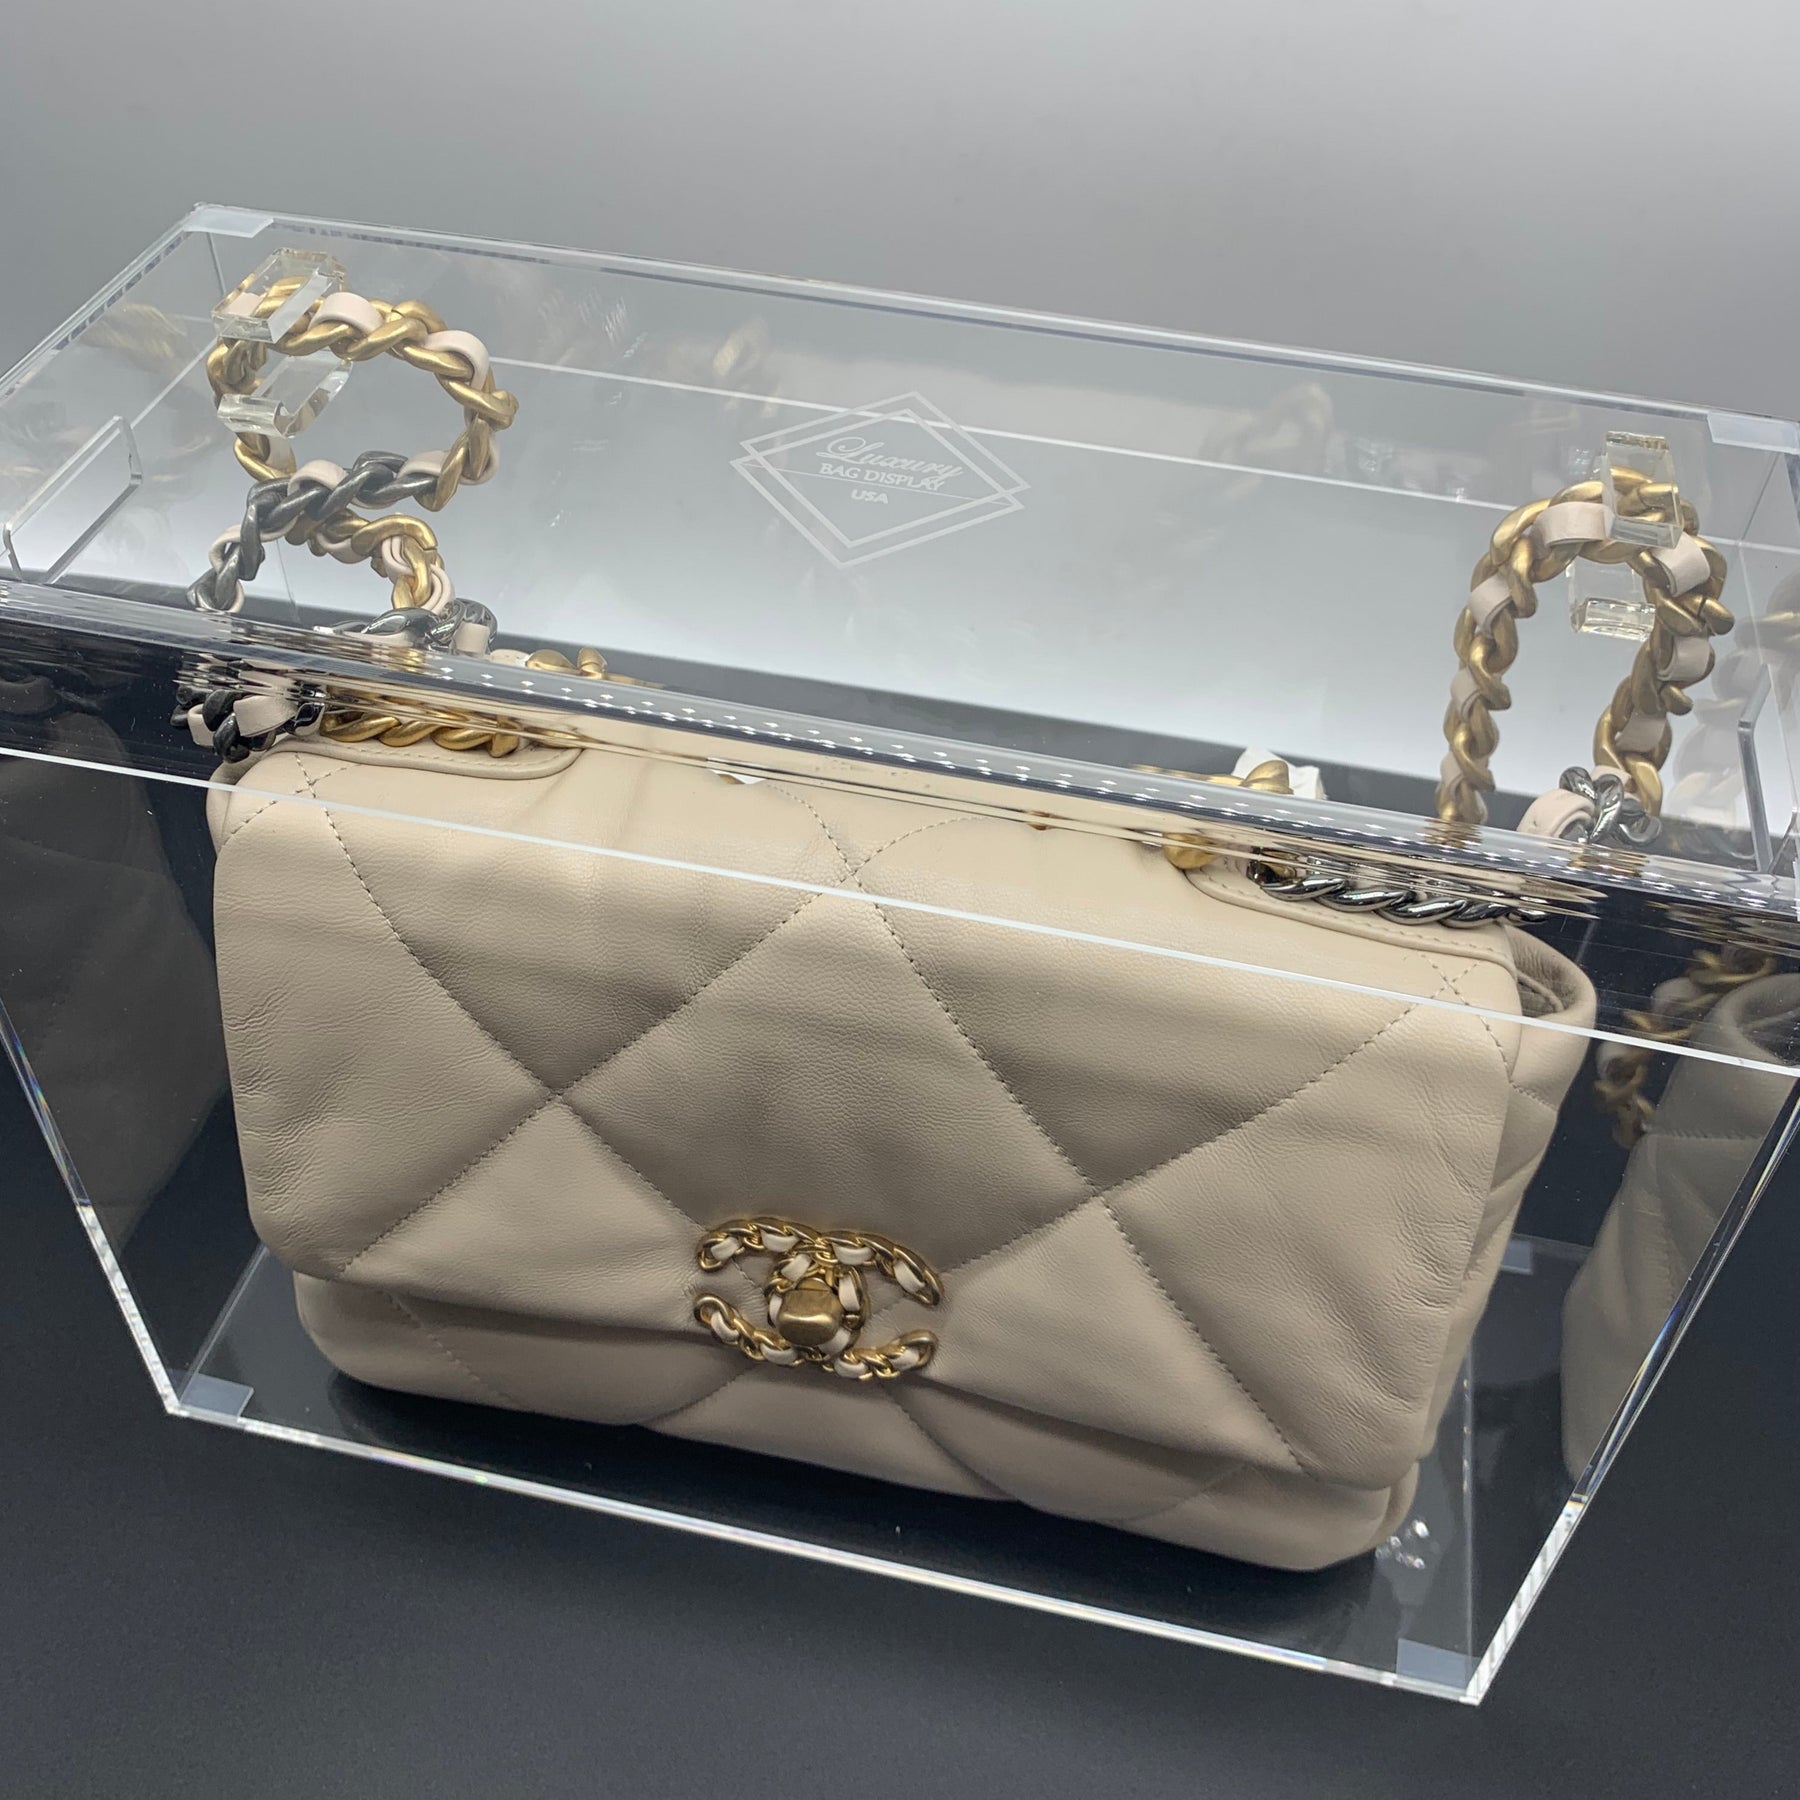 MISLUX BAG ORGANIZER For MM Medium, Chanel Jumbo Flap, Hermes Tote